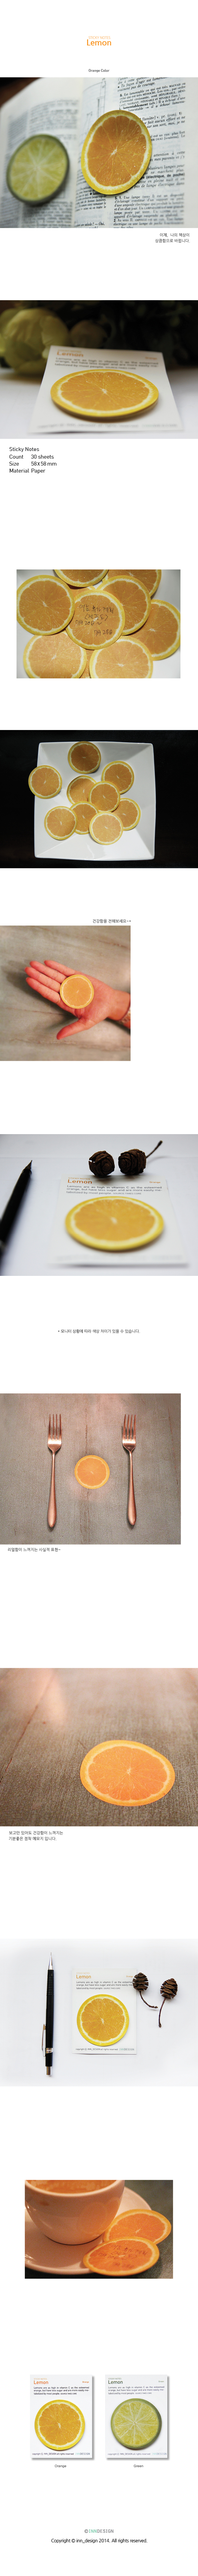 Lemon(orange)_접착식 메모지 1,800원 - 인디자인 디자인문구, 노트/메모, 메모지, 점착메모지 바보사랑 Lemon(orange)_접착식 메모지 1,800원 - 인디자인 디자인문구, 노트/메모, 메모지, 점착메모지 바보사랑